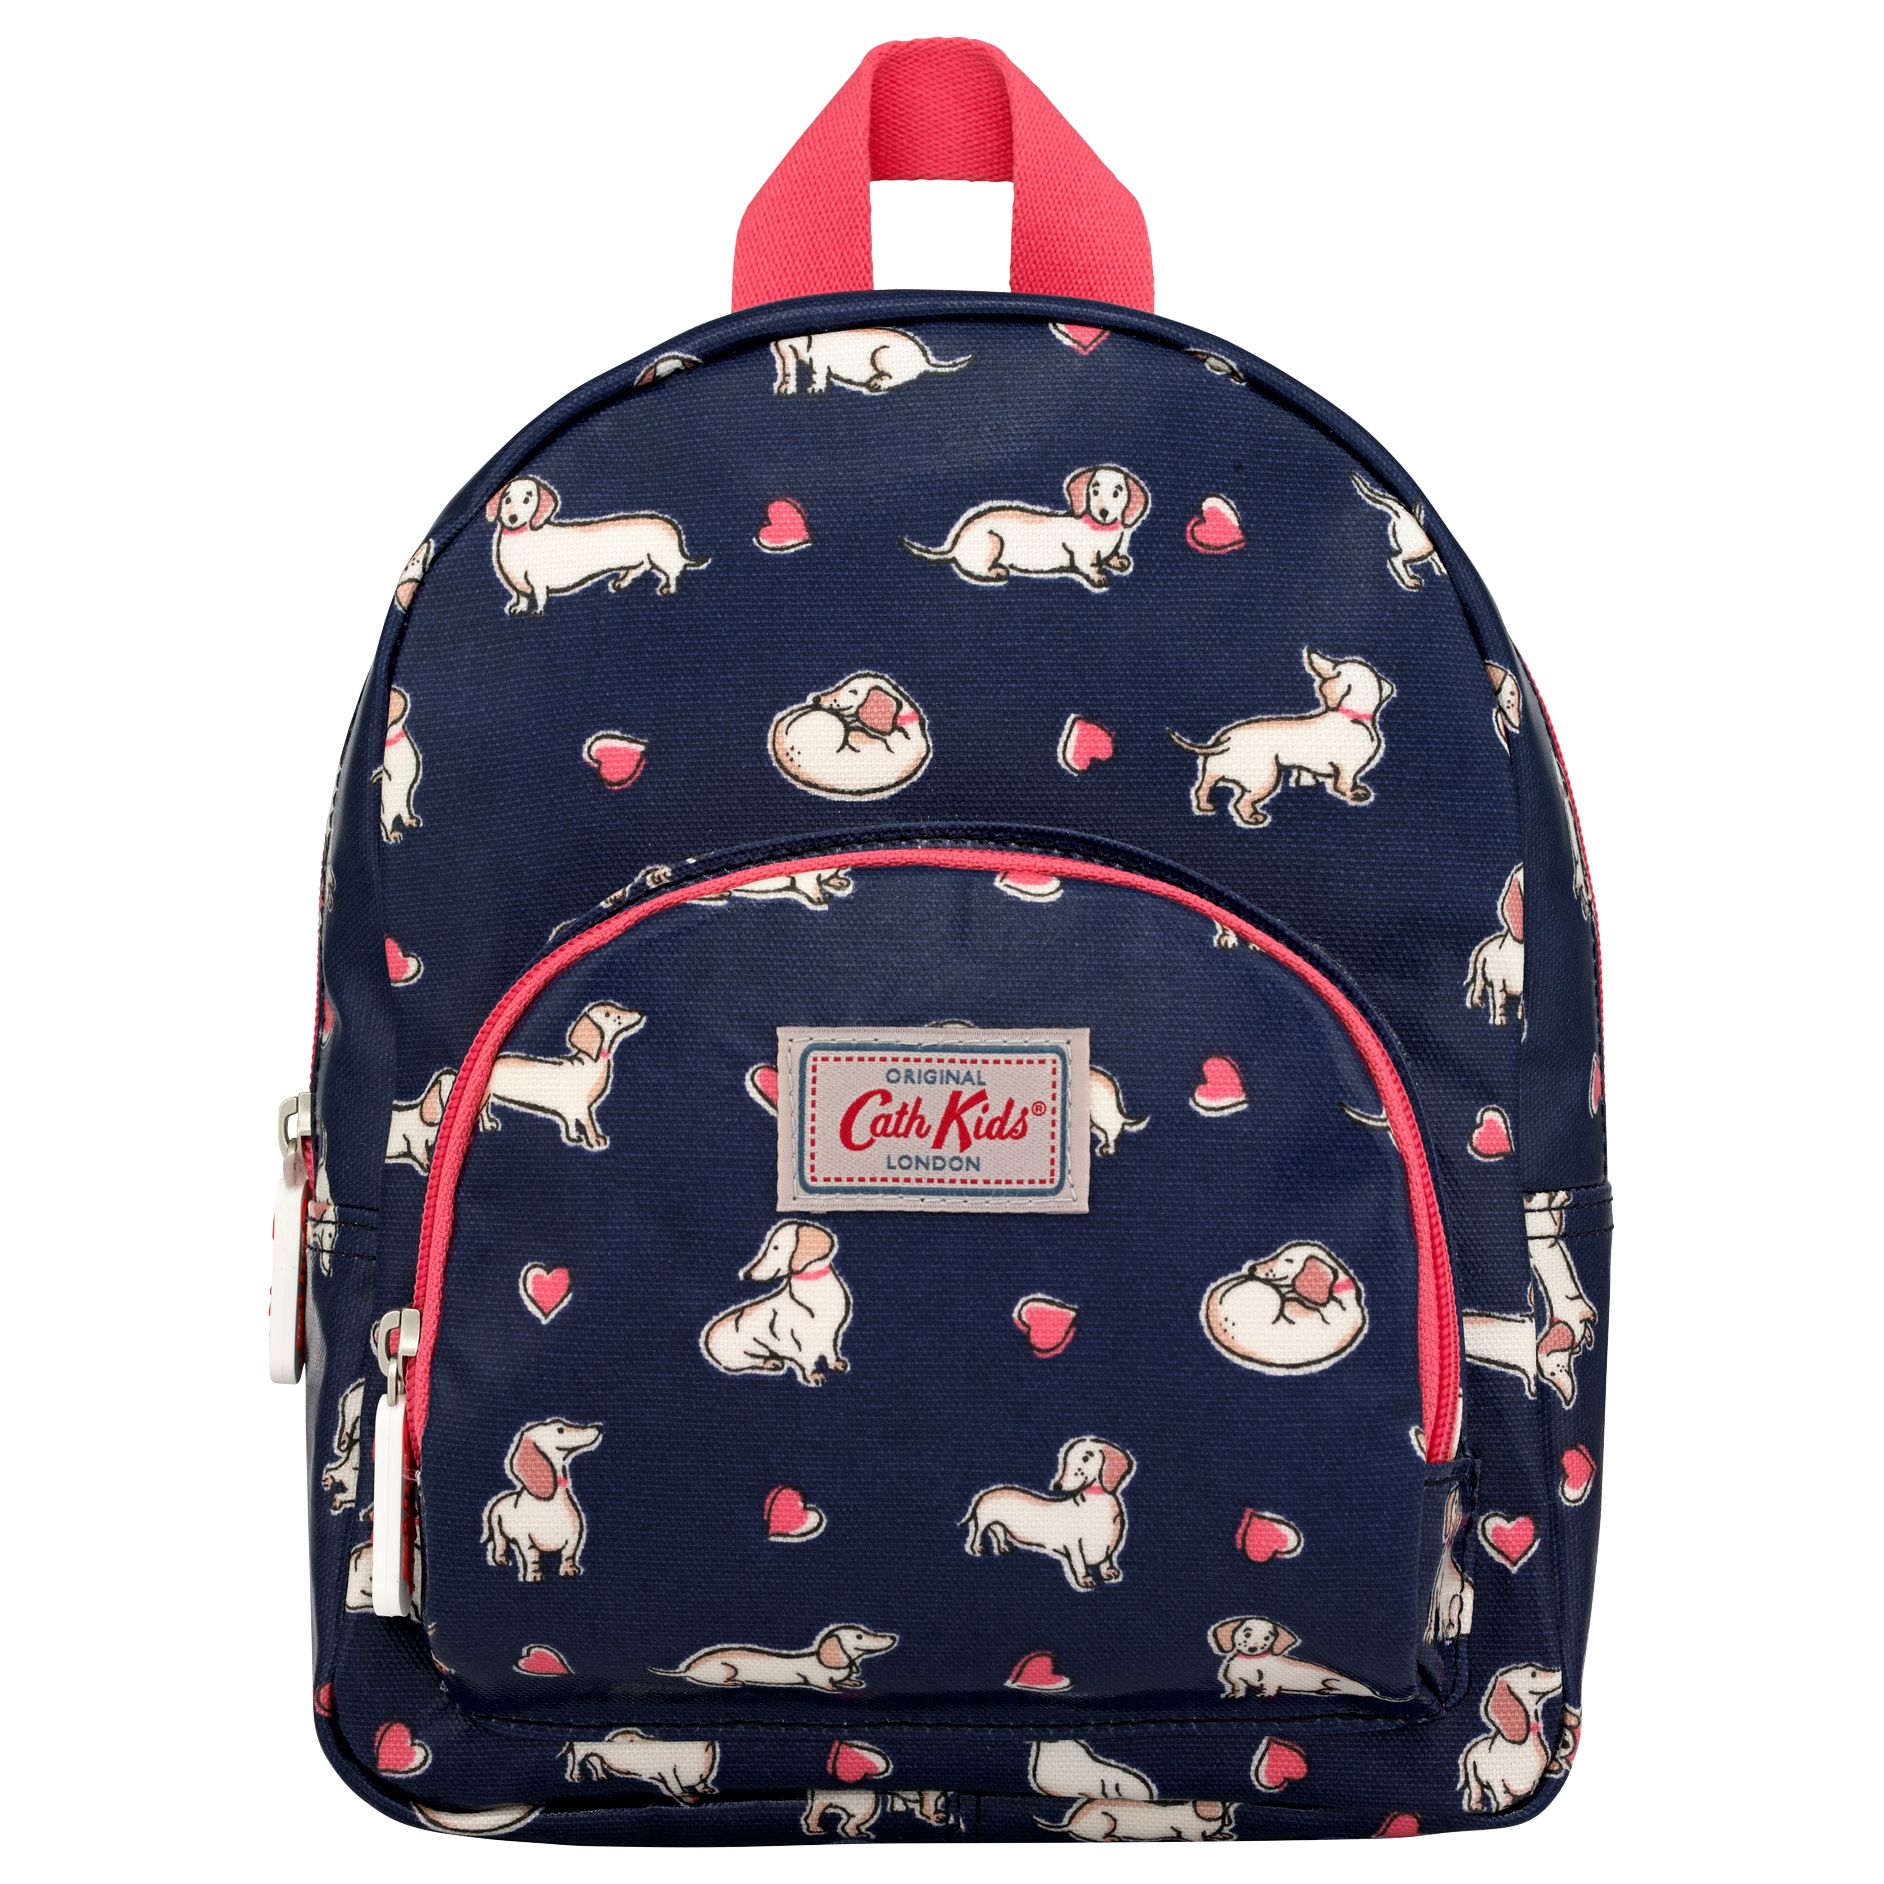 cath kidston children's backpack sale